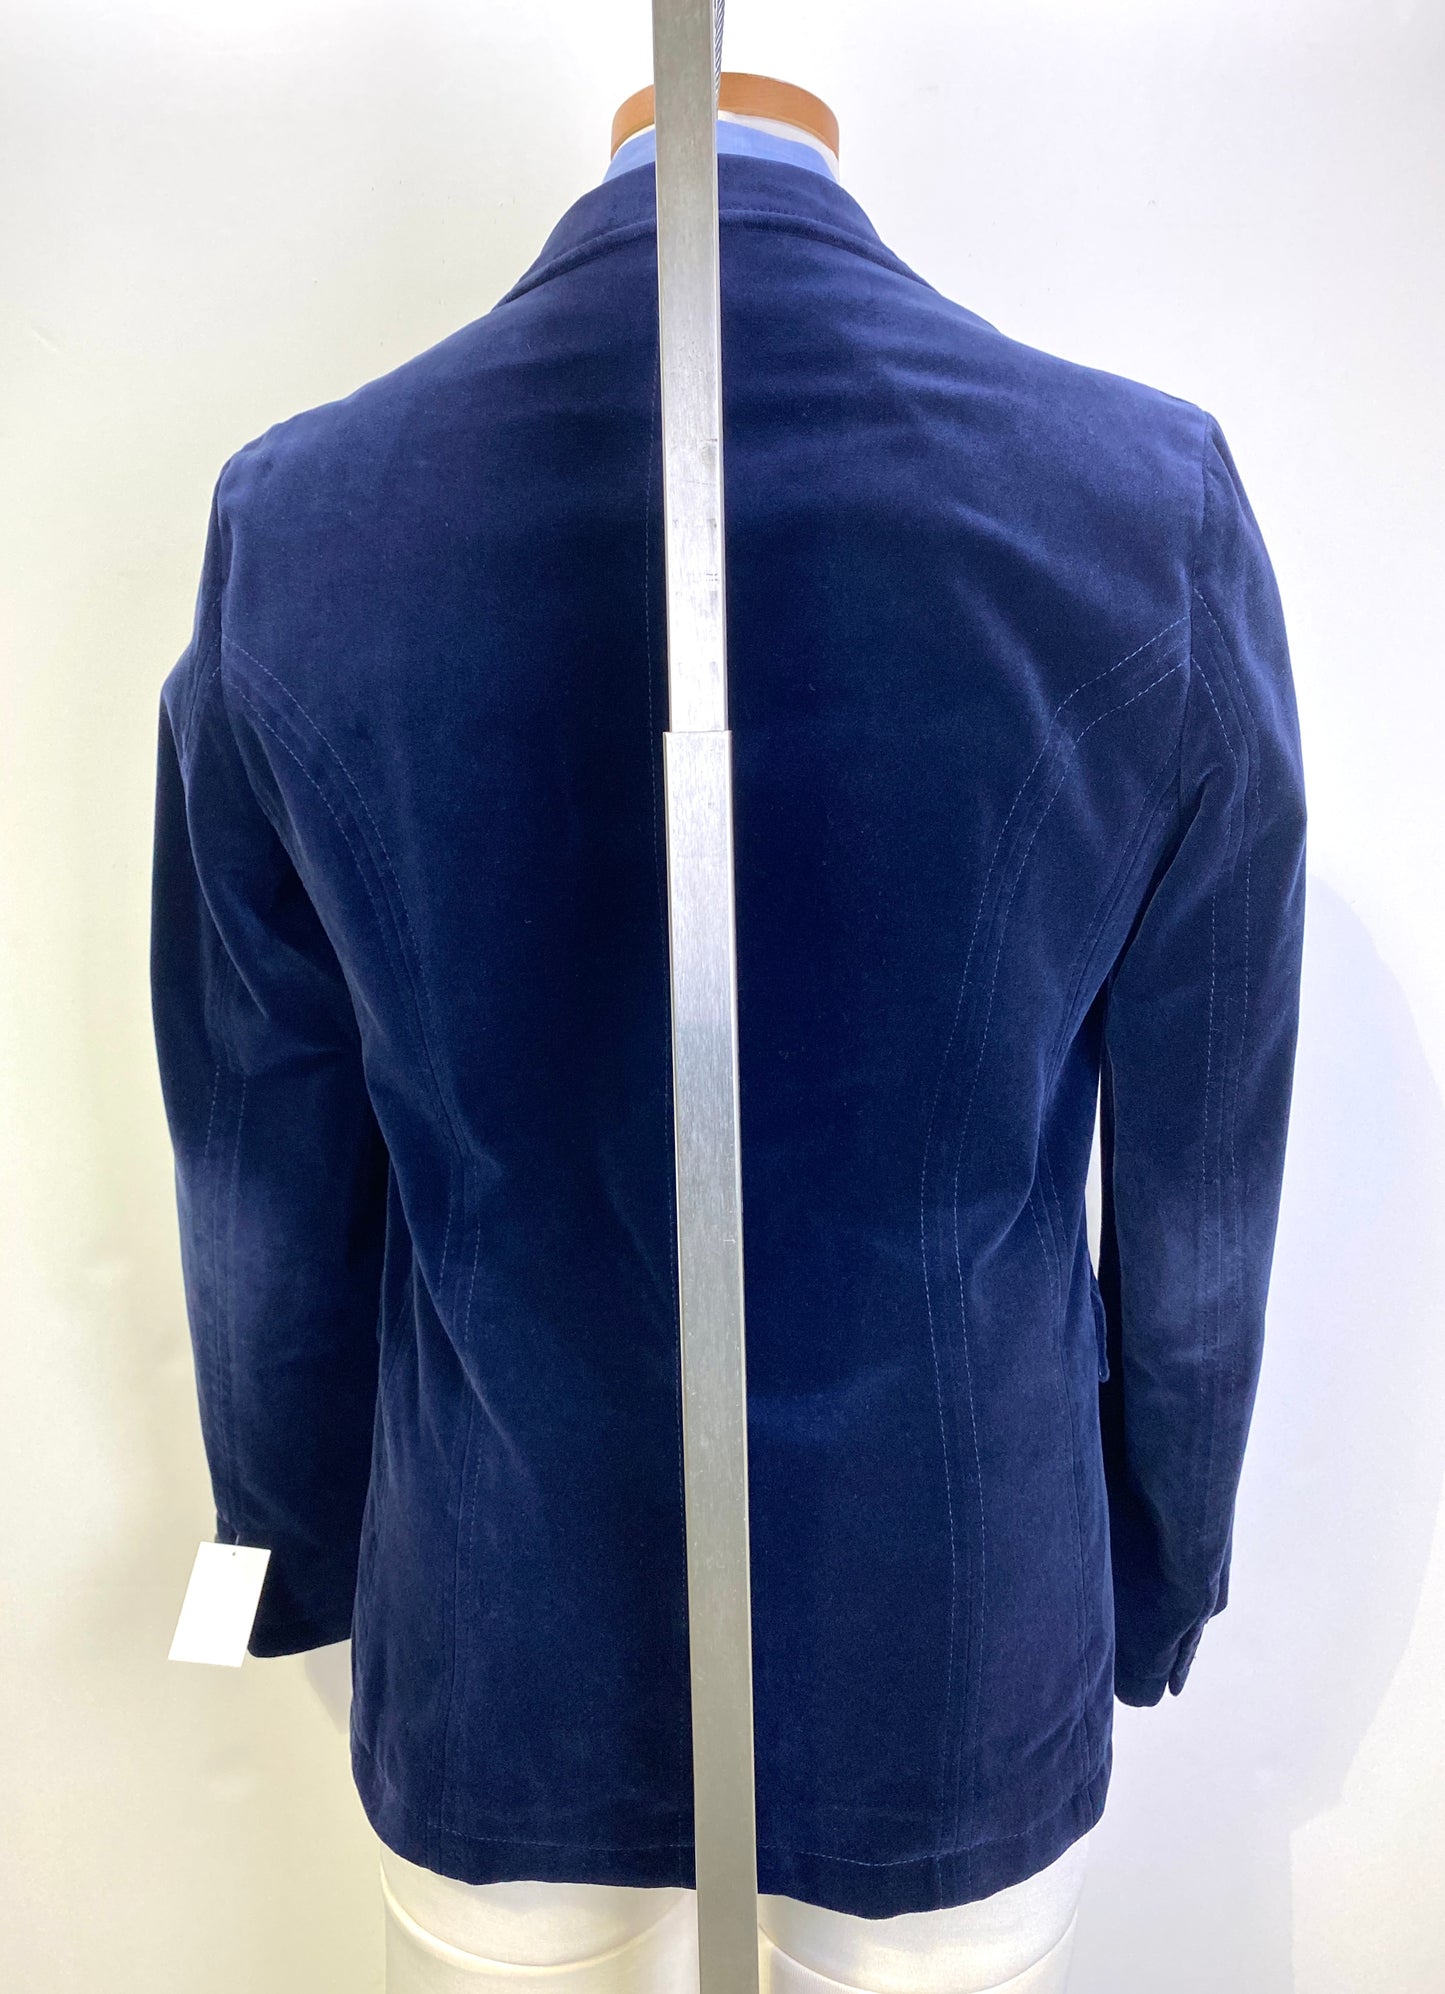 1990s Vintage Suit Jacket, Single-Breast Blue Velvet Blazer, United Colours of Benetton, C38